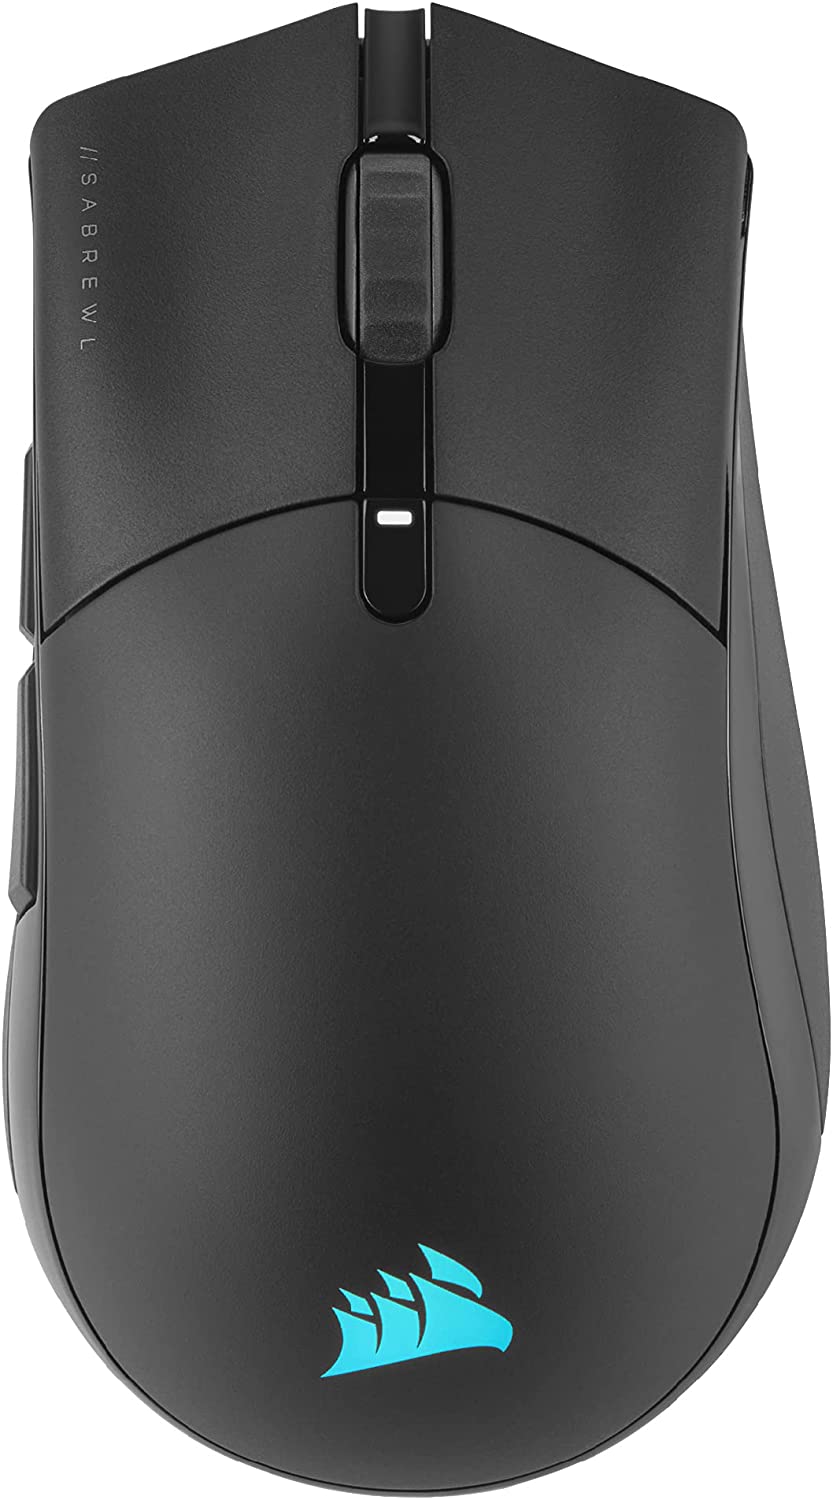 CORSAIR SABRE RGB PRO WIRELESS CHAMPION SERIES Wireless Gaming Mouse (Black) - $79.99 + FS